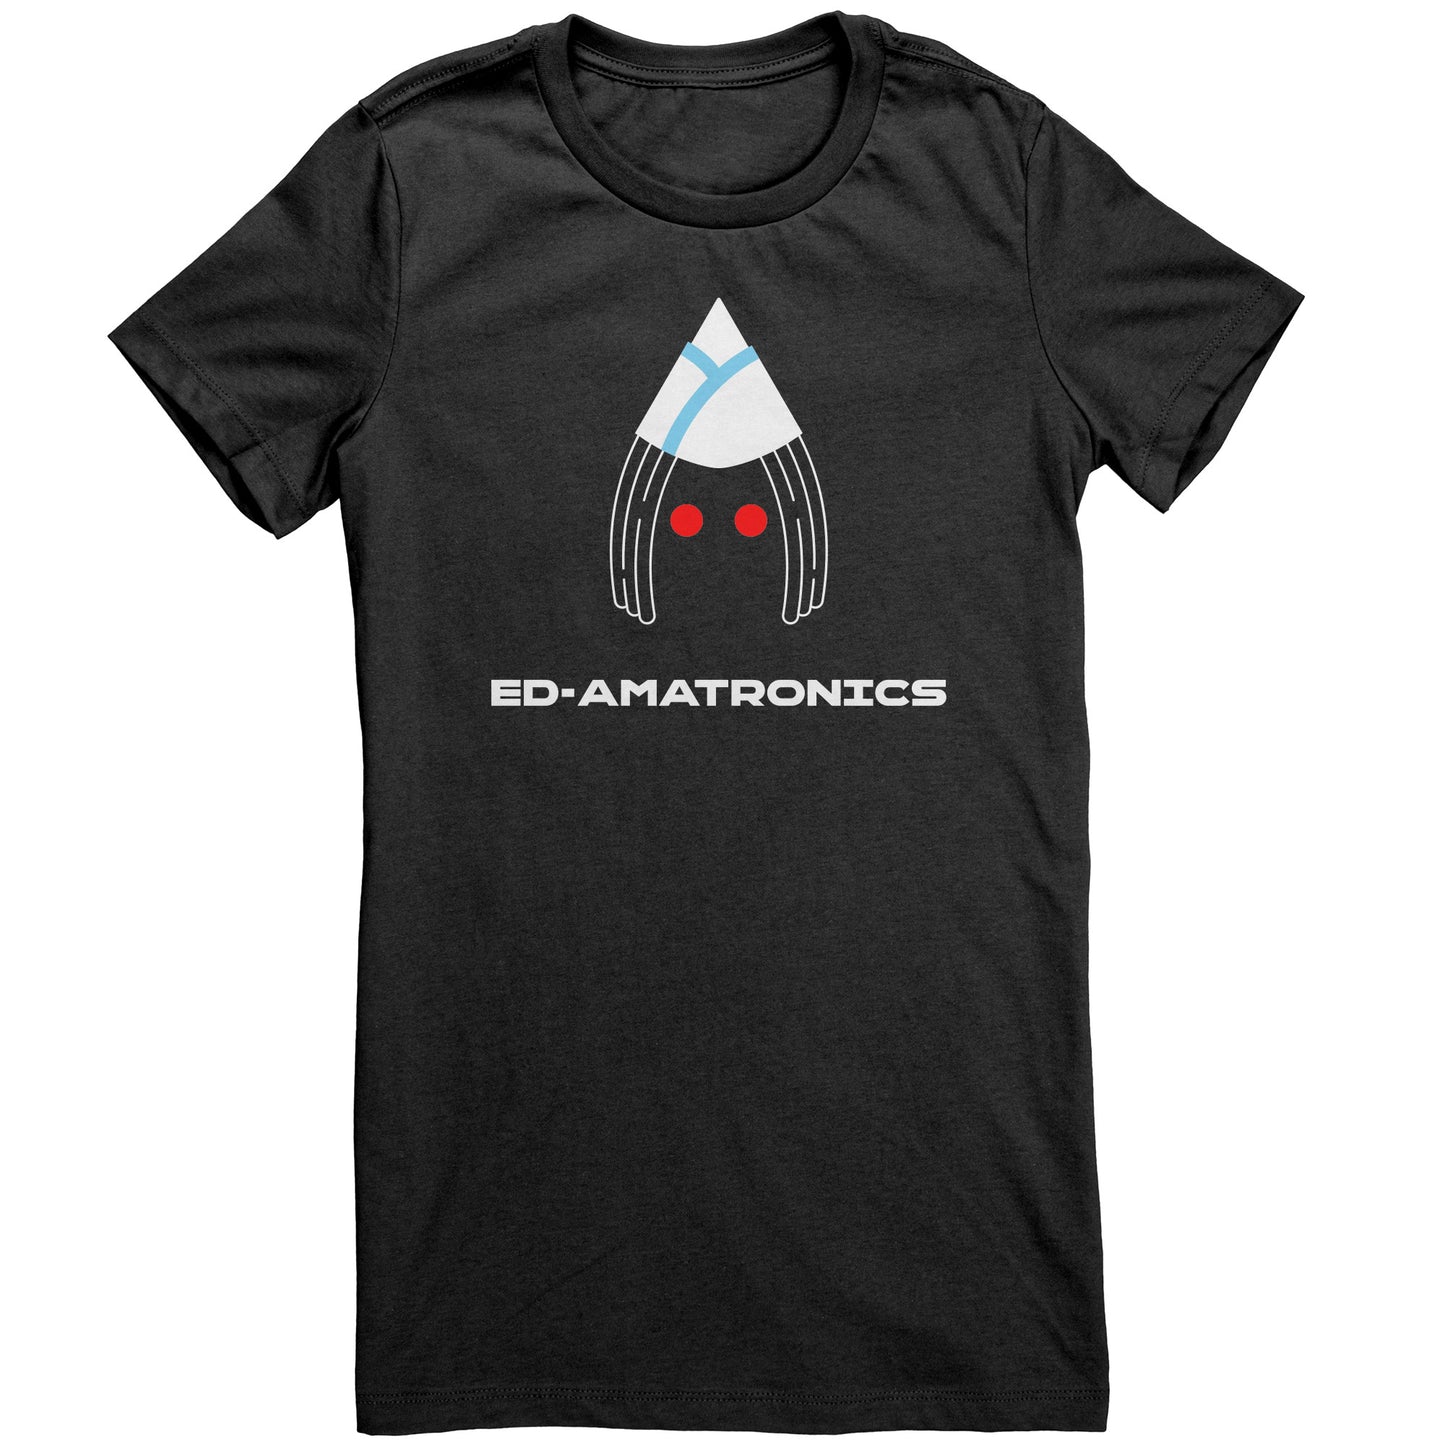 Ed-Mantronics t-shirt